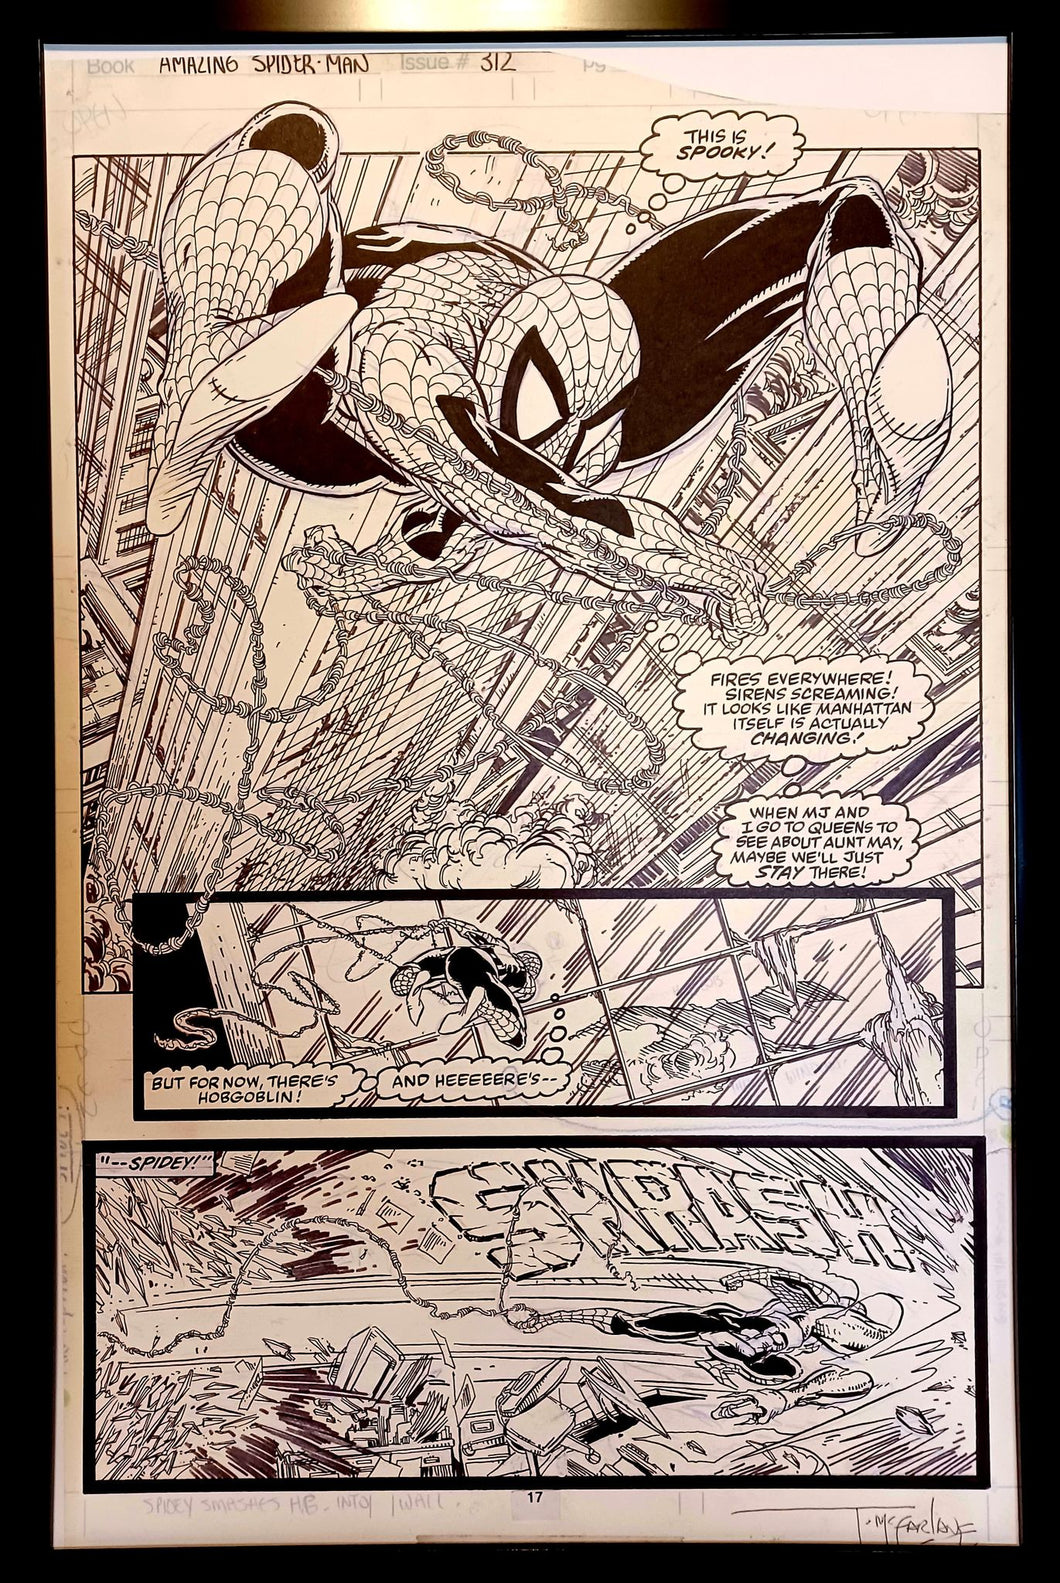 Amazing Spider-Man #312 pg. 13 by Todd McFarlane 11x17 FRAMED Original Art Print Comic Poster